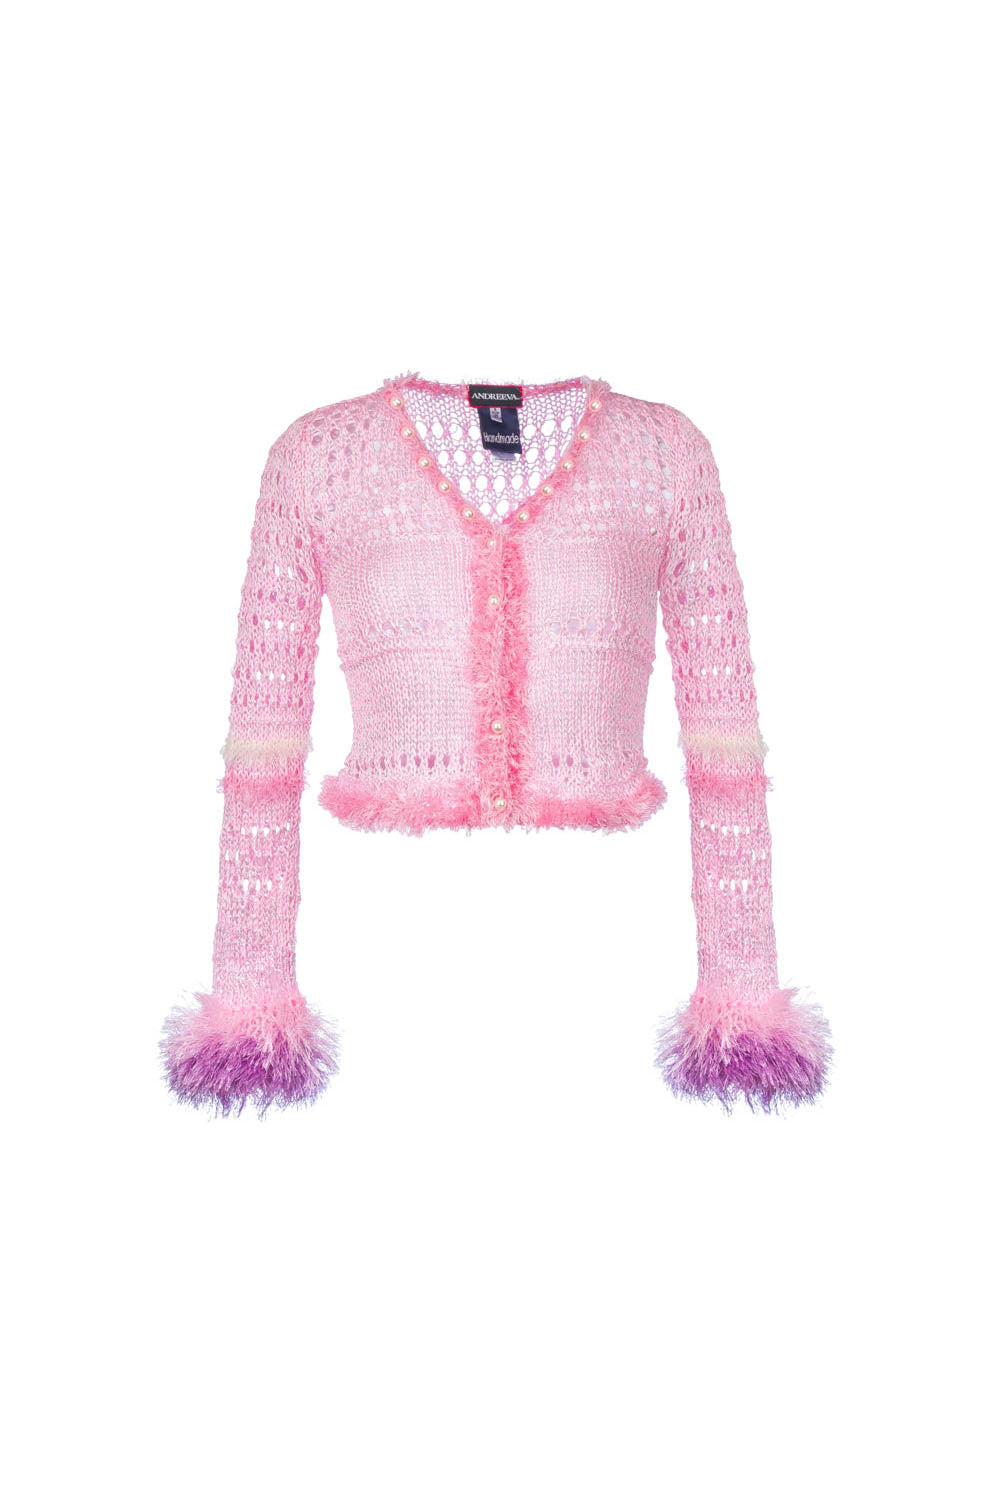 ANDREEVA |Baby Pink Handmade Knit Sweater